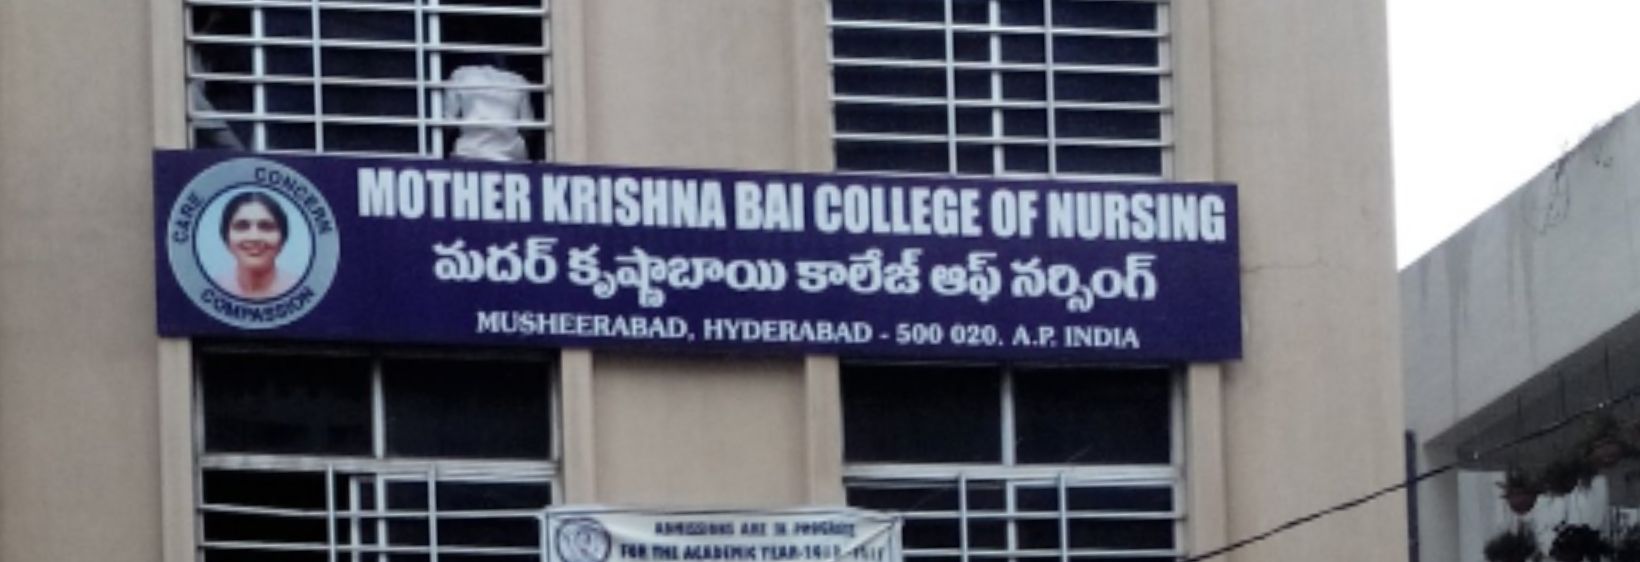 Mother Krishna Bai College of Nursing - Hyderabad